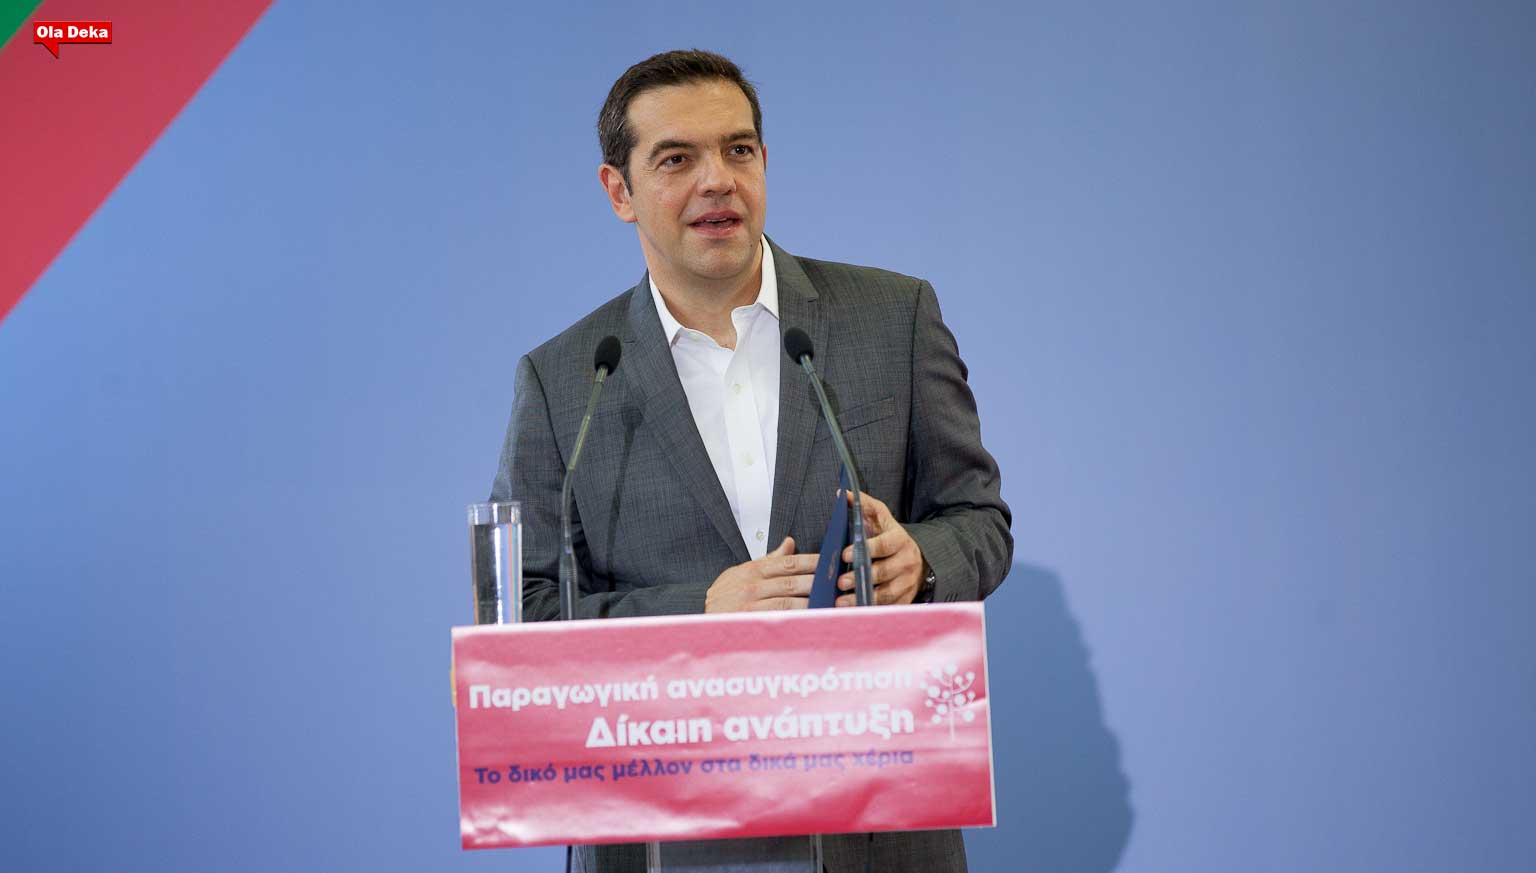 tsipras-oladeka